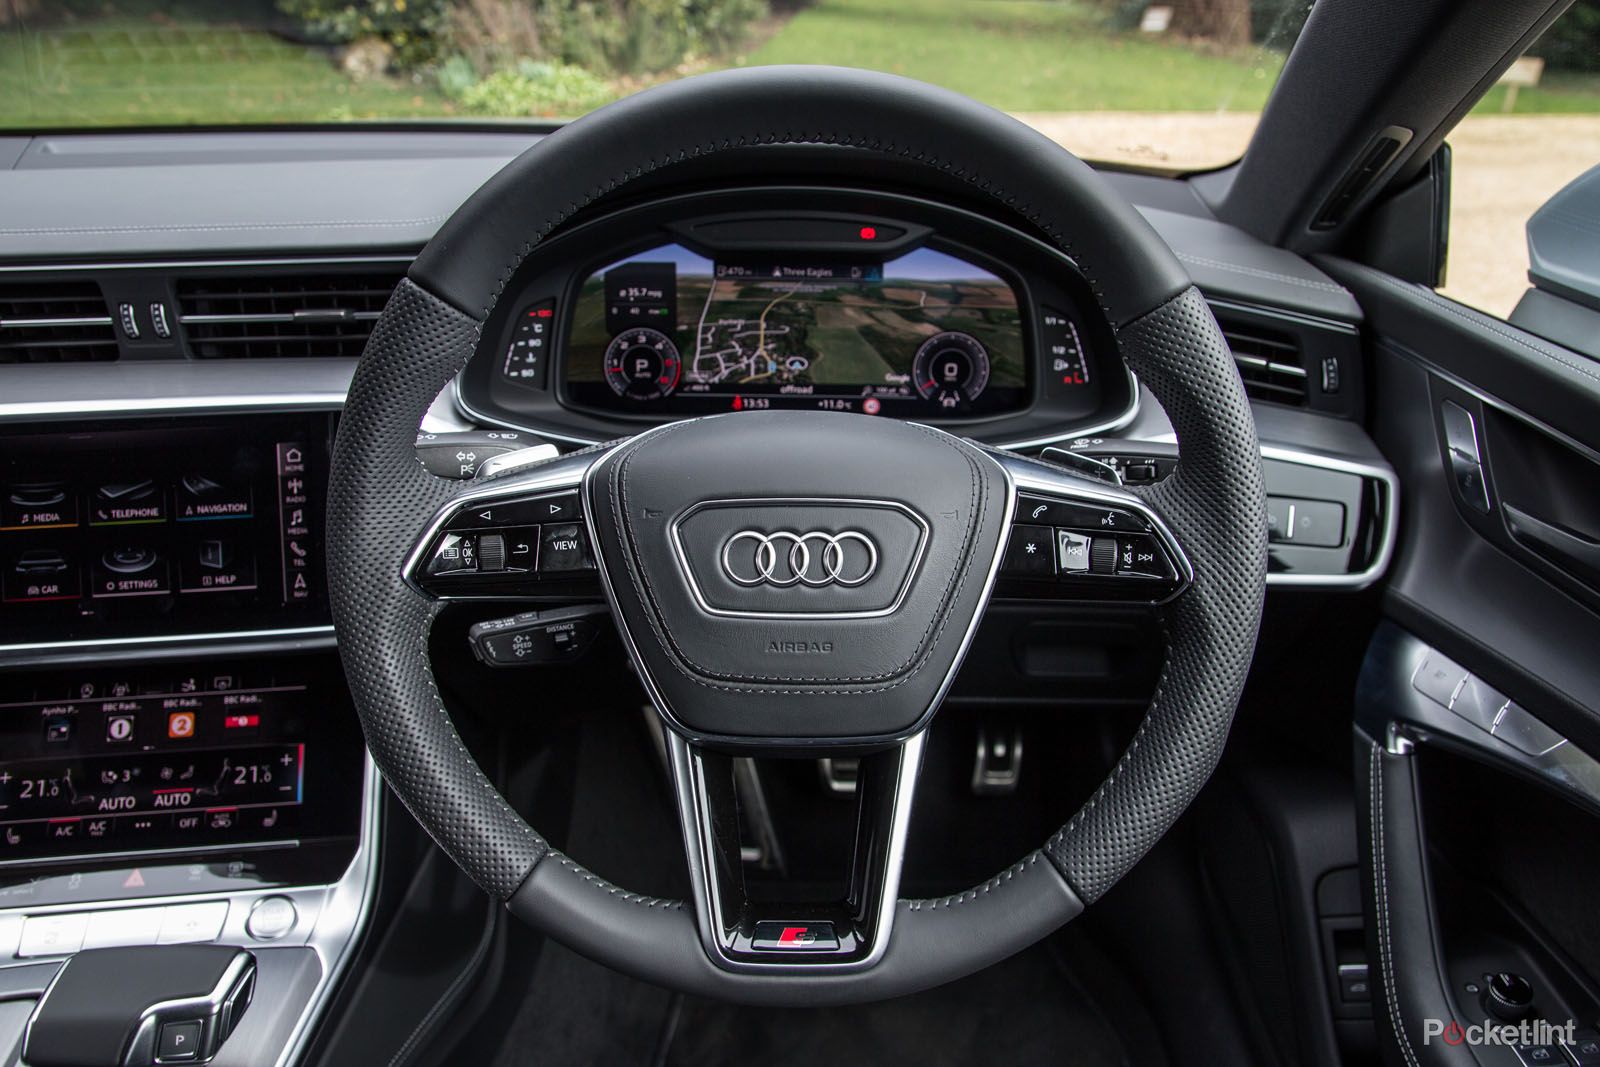 Audi A7 interior image 2